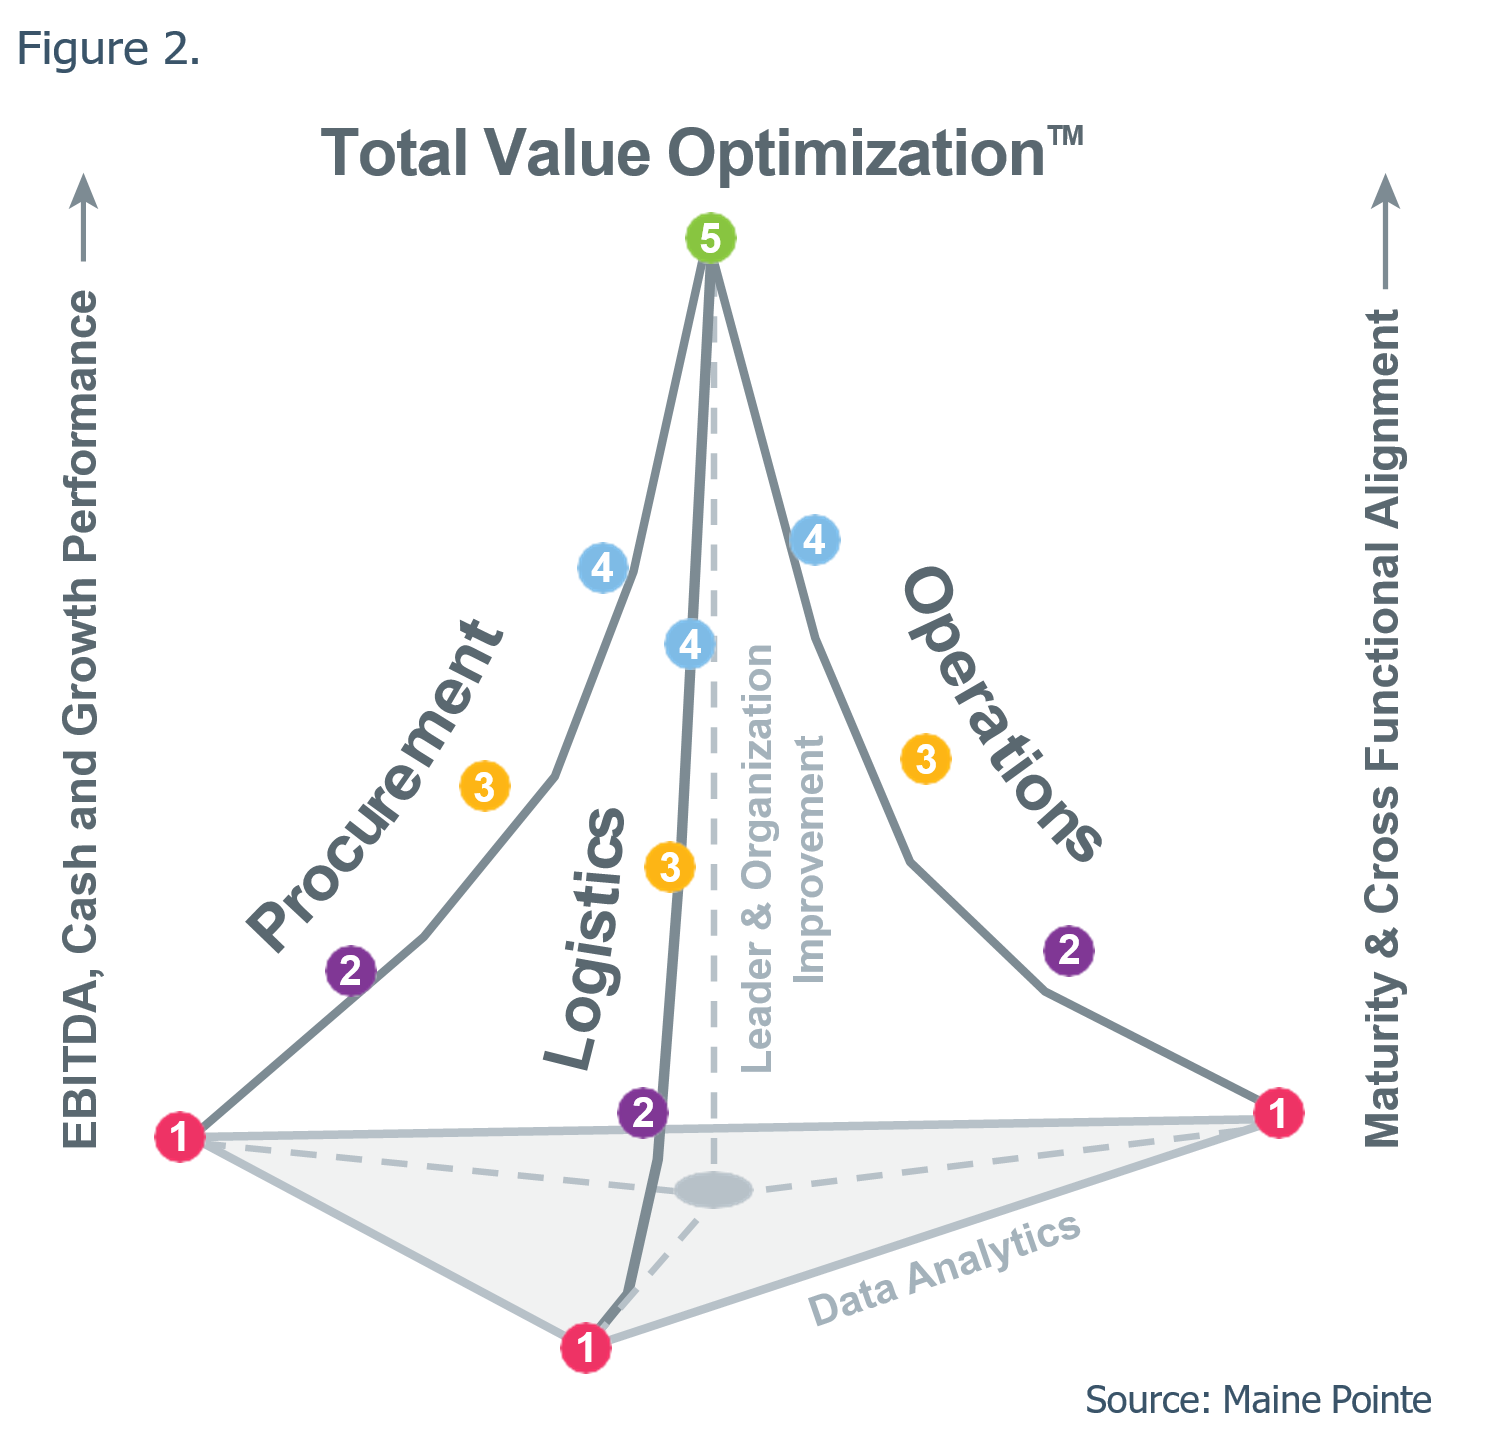 Figure 2: Total Value Optimization